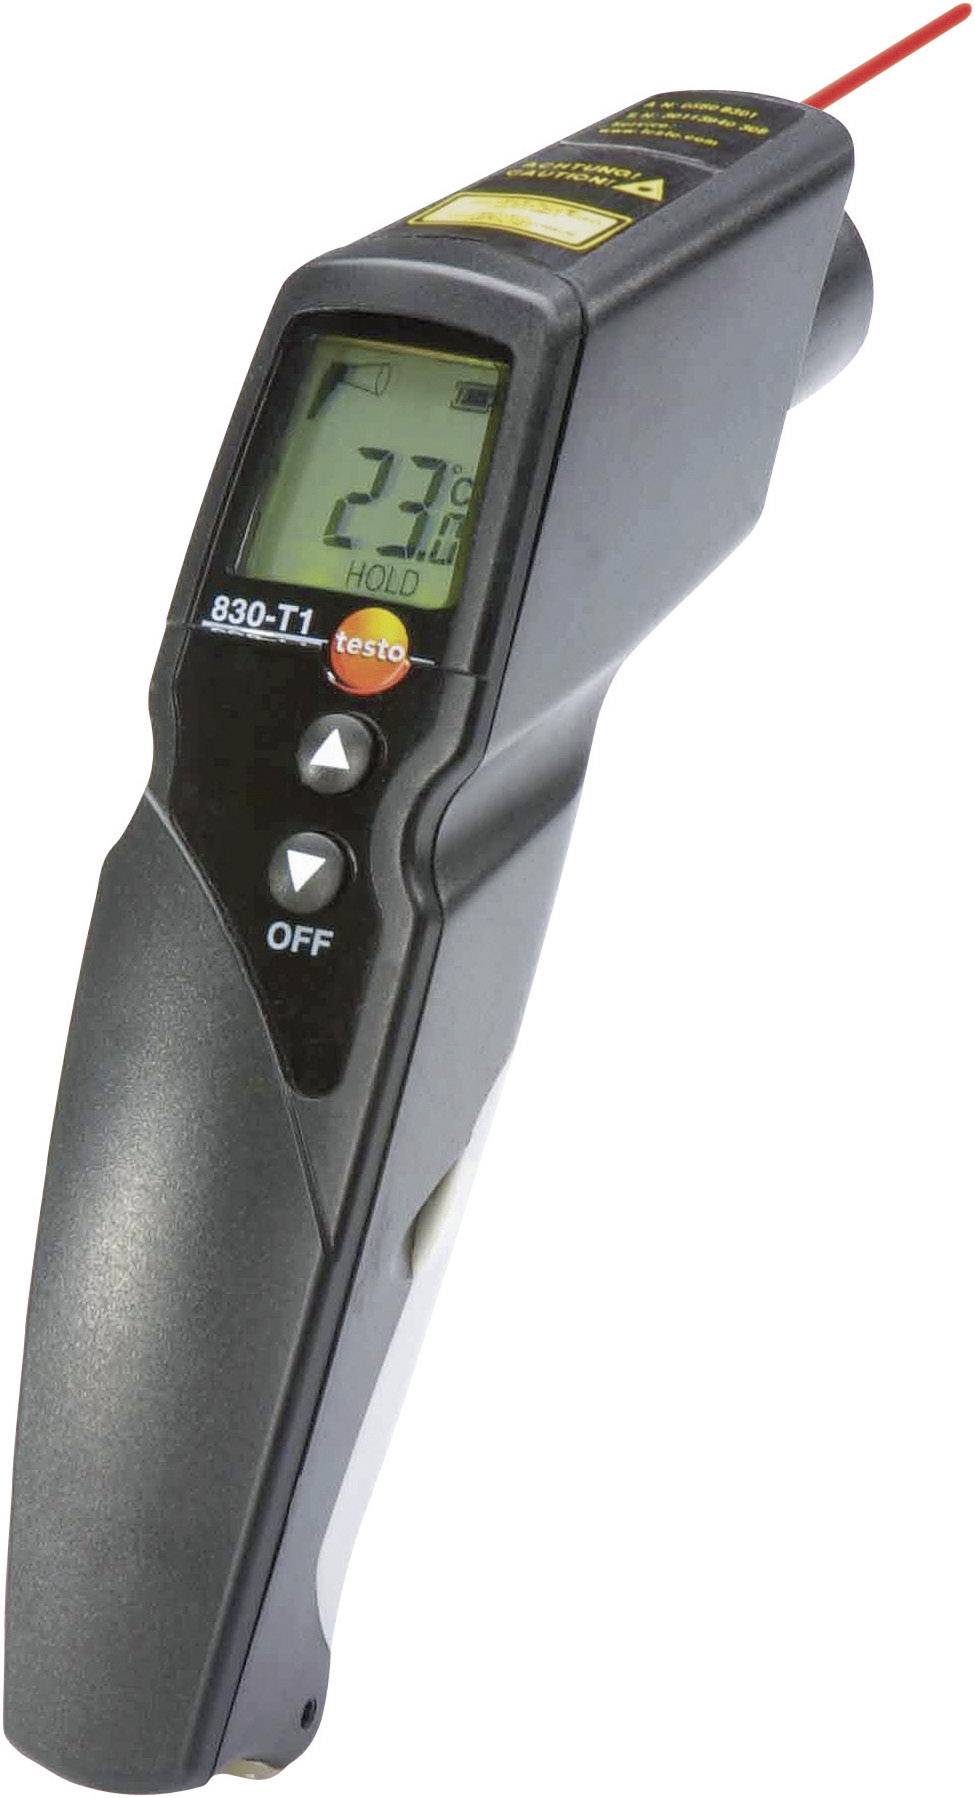 TESTO Infrarot-Thermometer testo testo 830-T1 Optik 10:1 -30 bis +400 °C Kalibriert nach: DAkkS